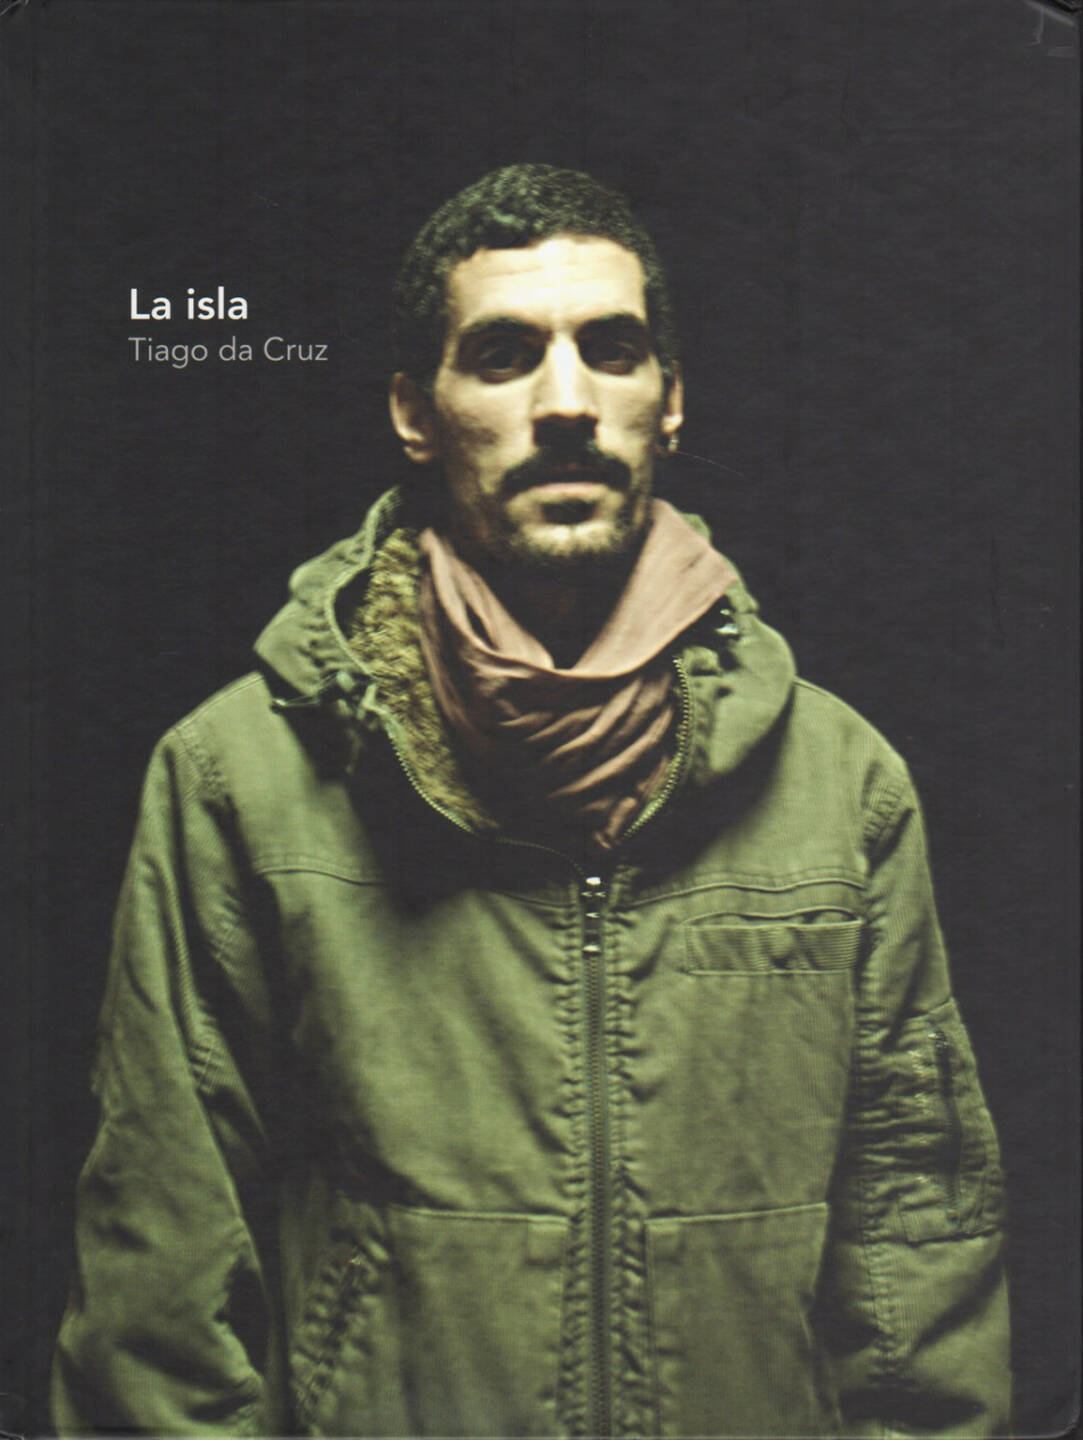 Tiago da Cruz - La isla, Acento 2000 2014, Cover - http://josefchladek.com/book/tiago_da_cruz_-_la_isla